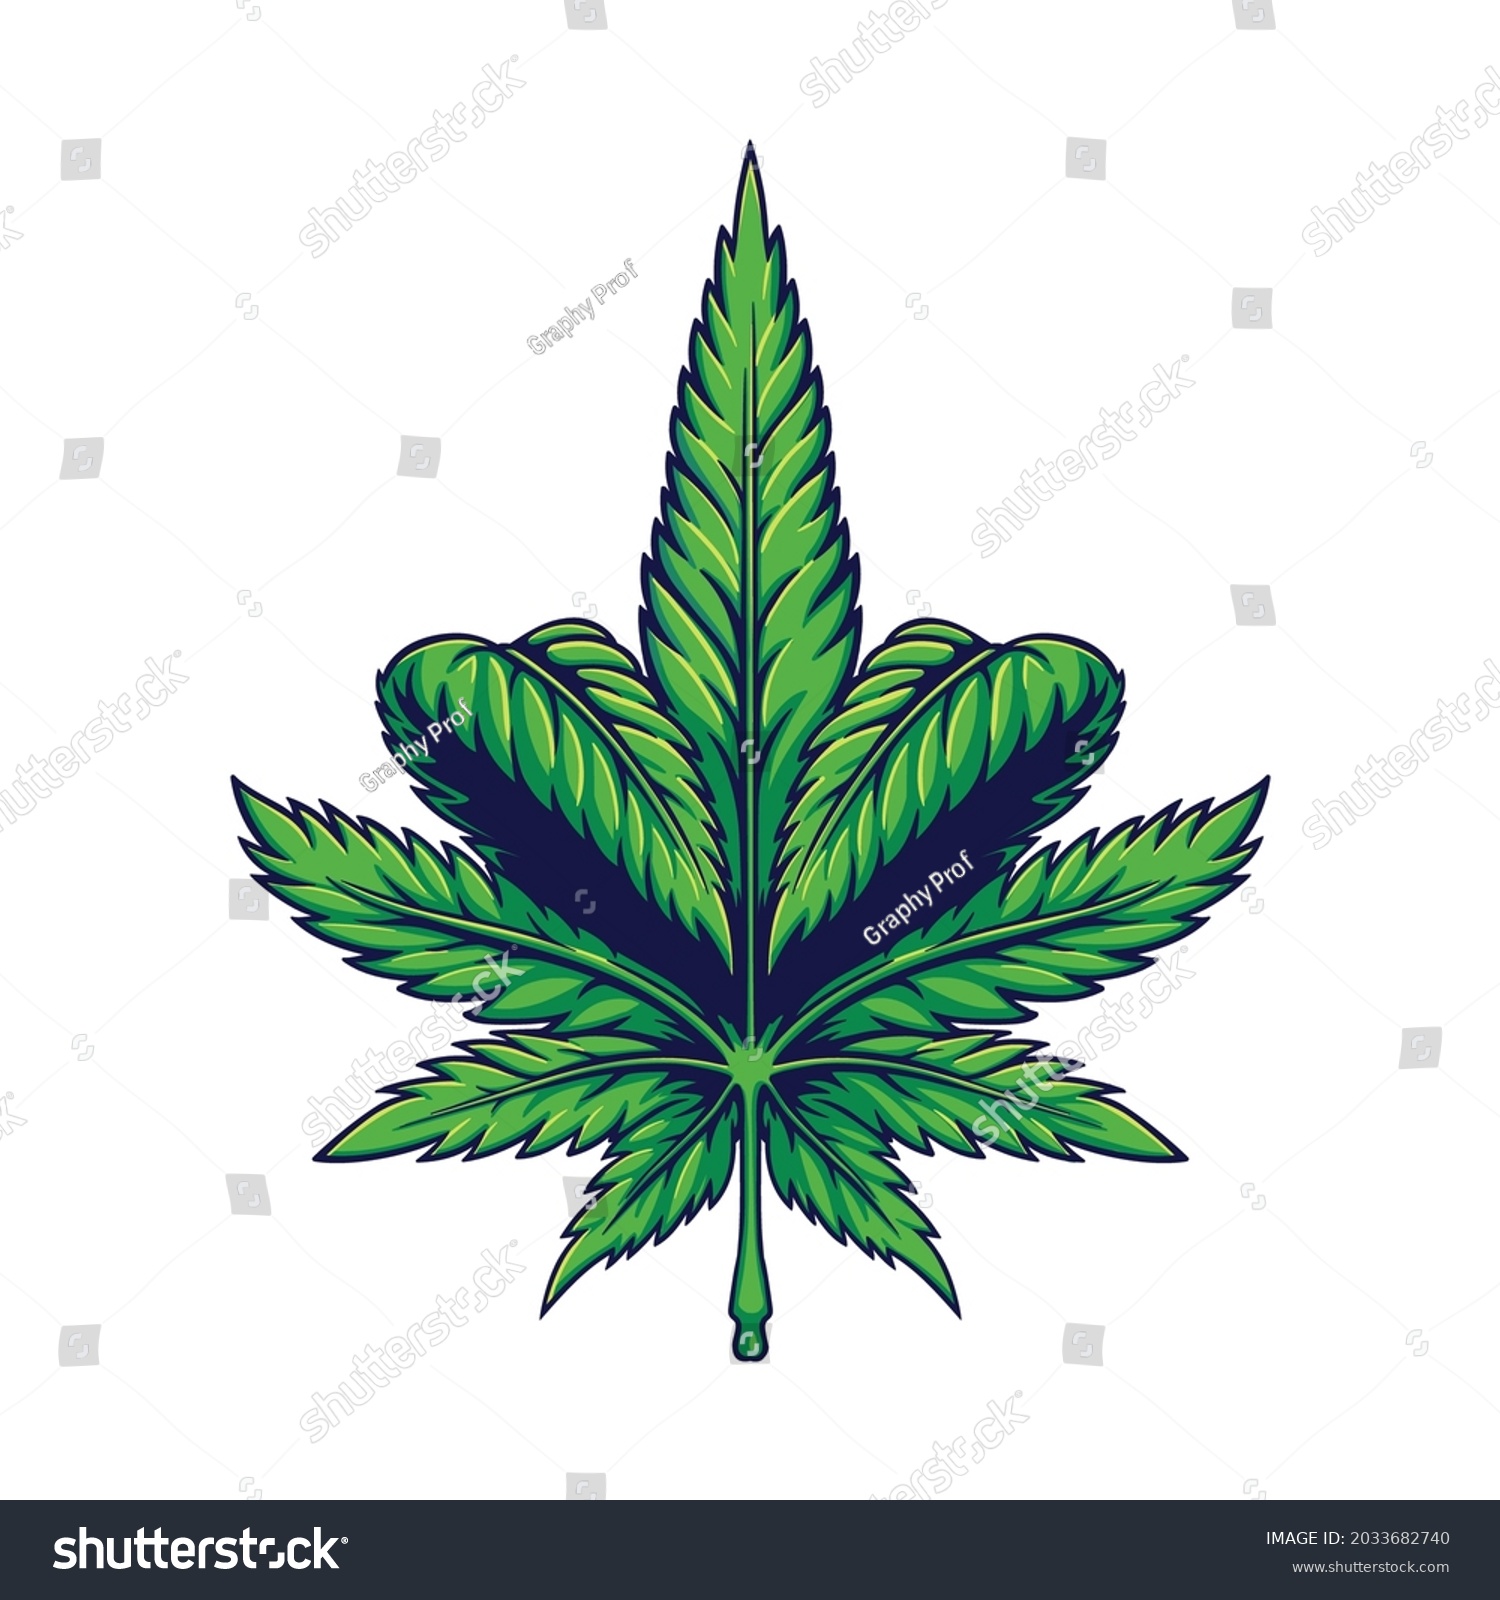 Marijuana Leaf Cannabis Leaf Vector Illustration Stock Vector (Royalty ...